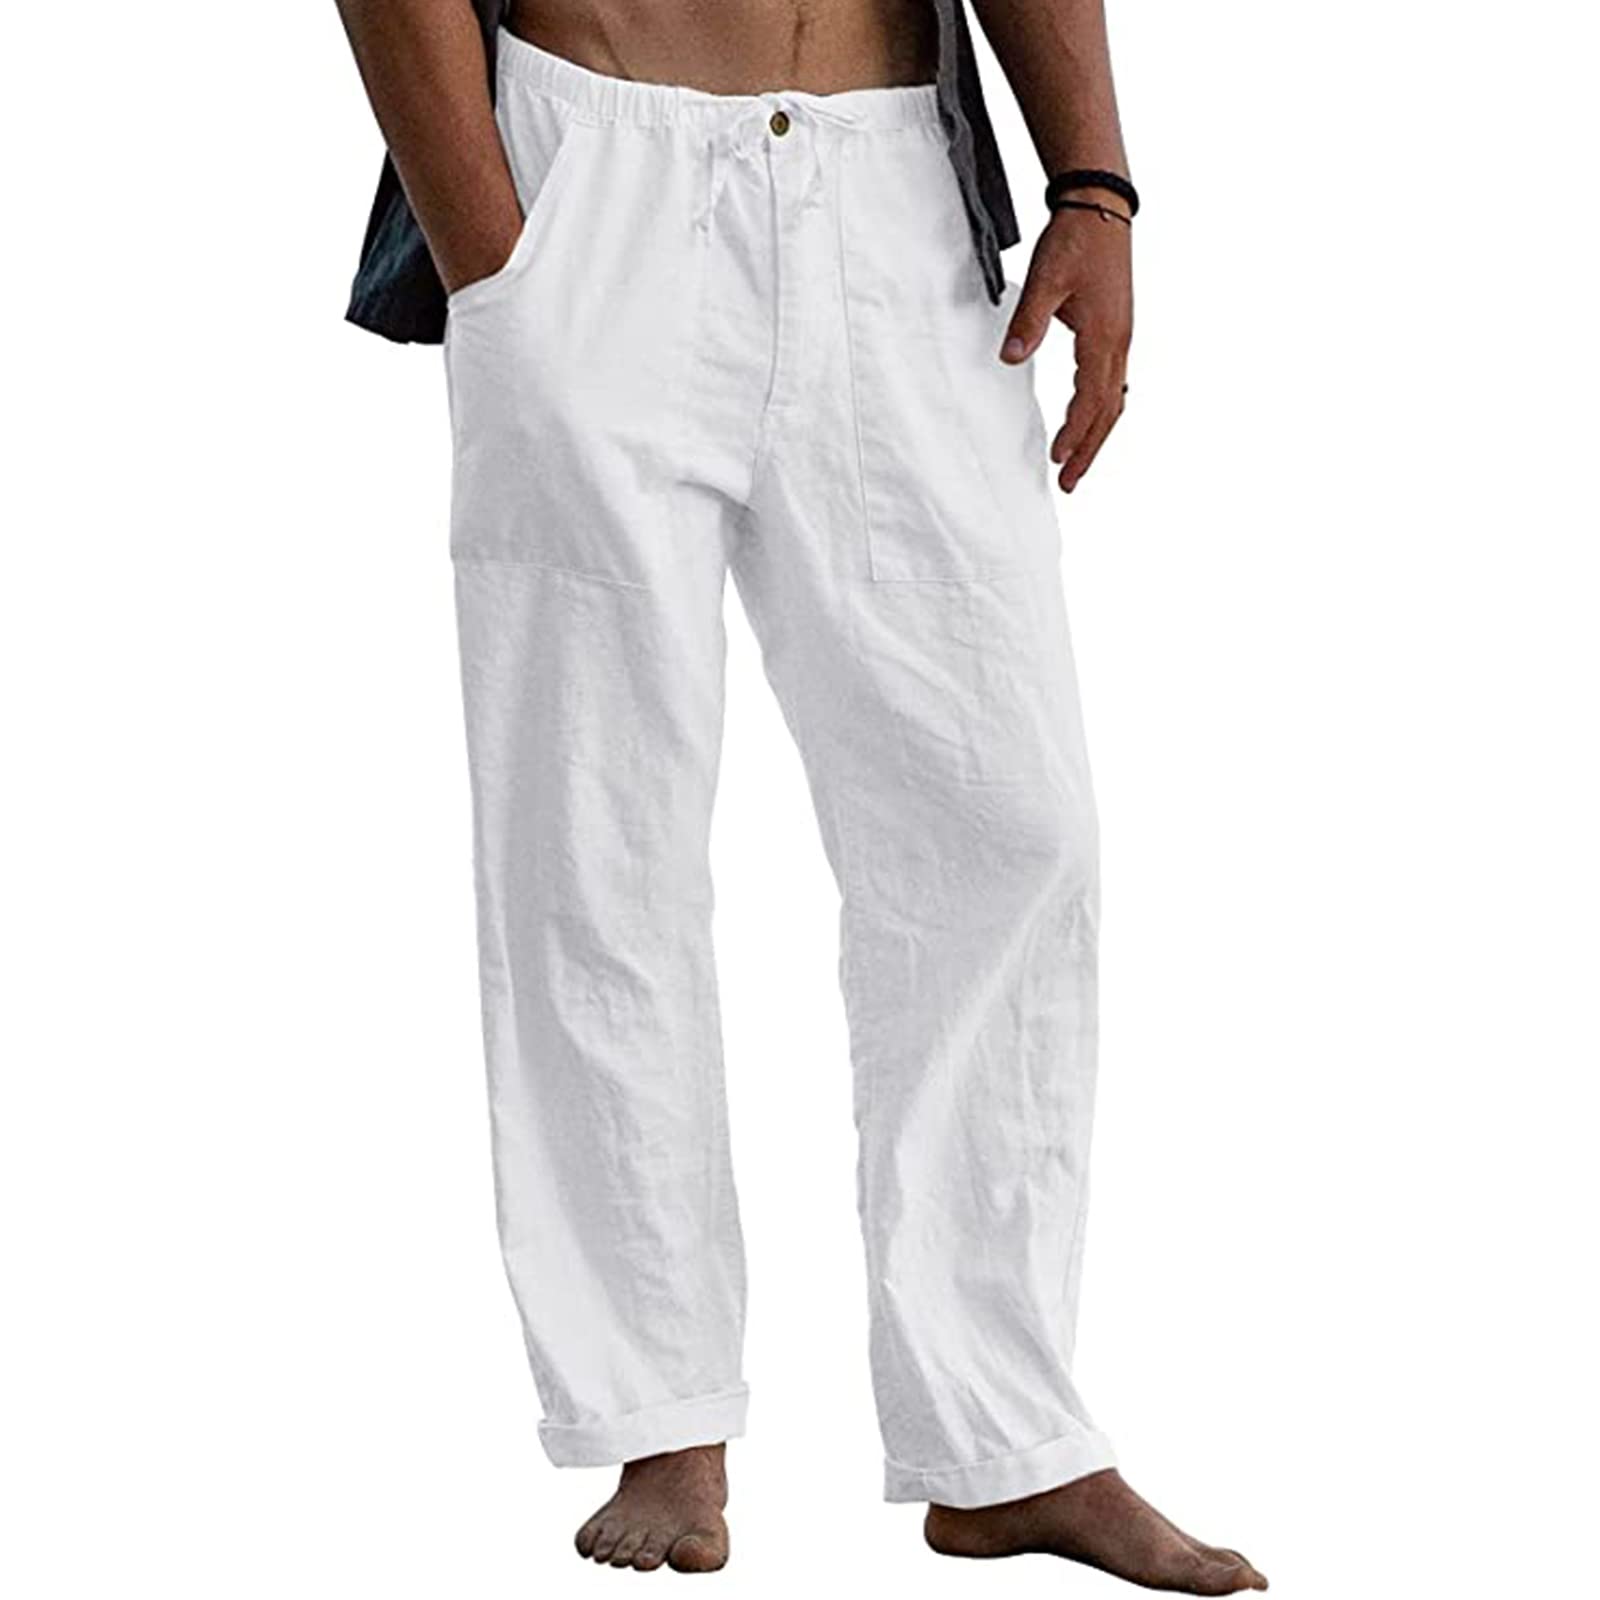 Angbater Men's Linen Summer Beach Pants Loose Fit Yoga Pant Casual